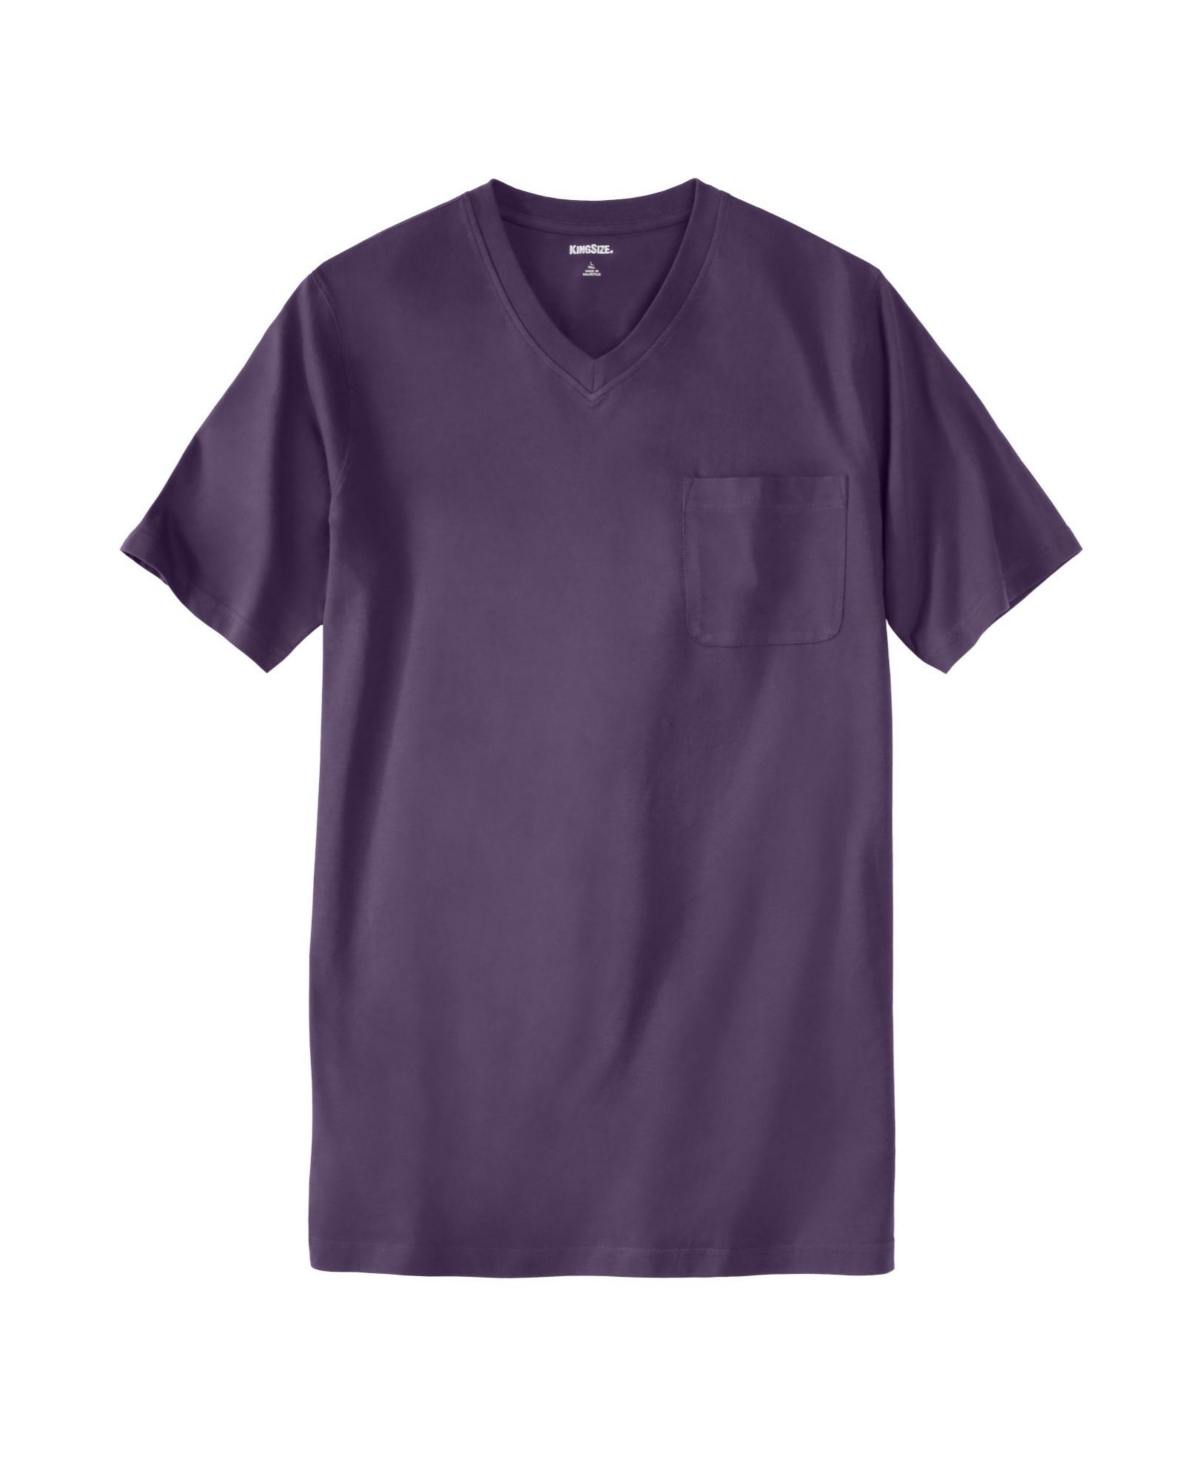 Big & Tall Shrink-Less Lightweight Longer-Length V-Neck T-Shirt - Vintage purple